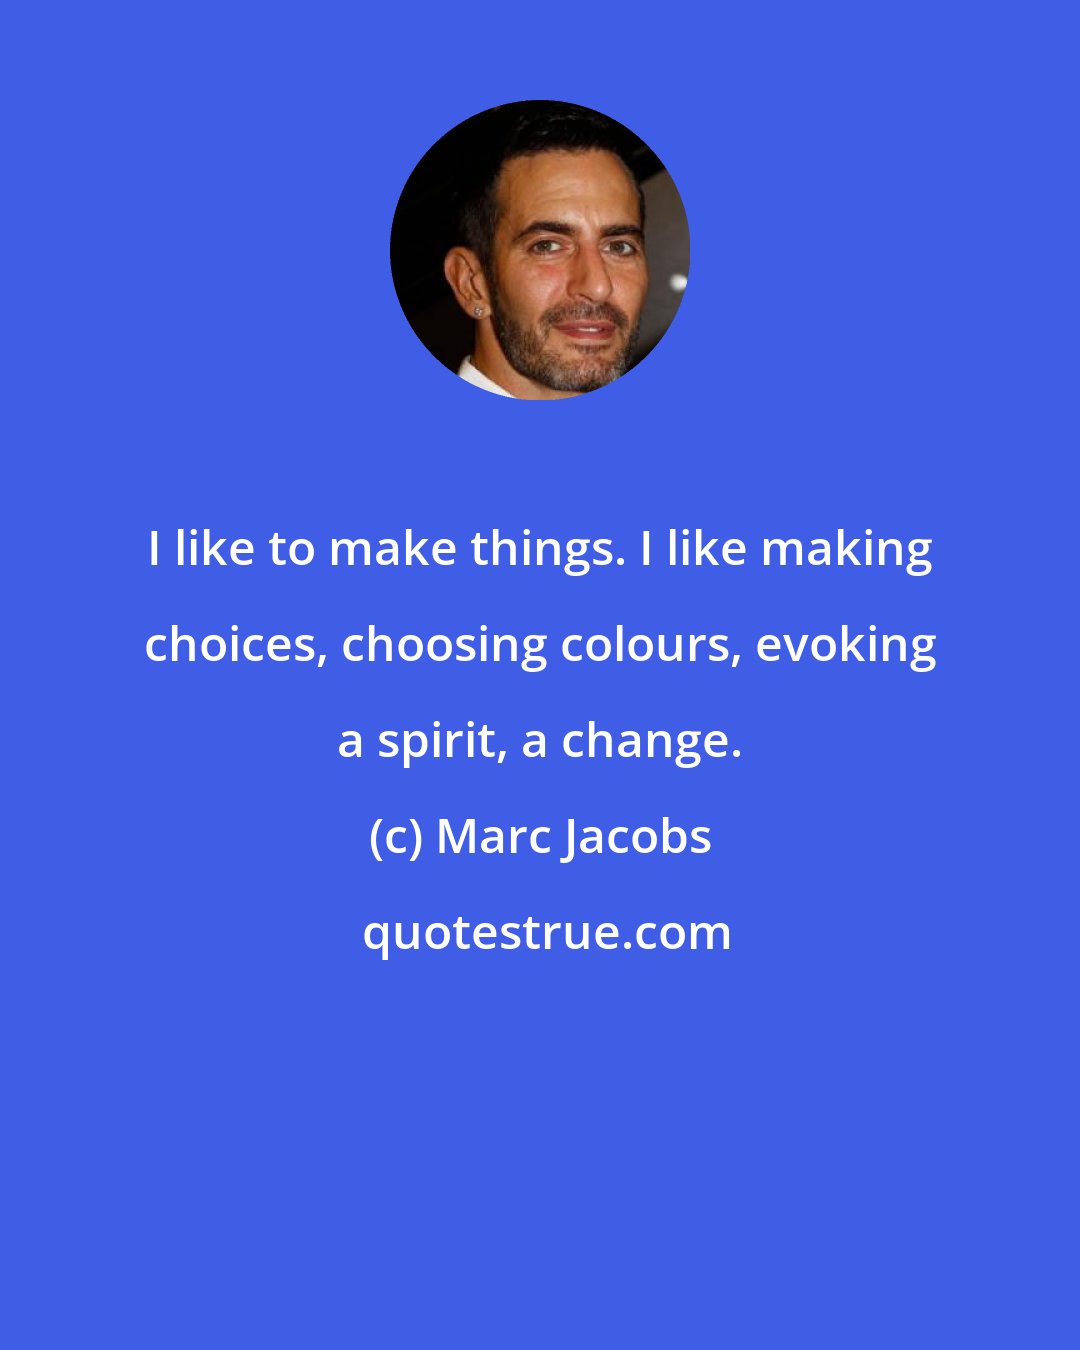 Marc Jacobs: I like to make things. I like making choices, choosing colours, evoking a spirit, a change.